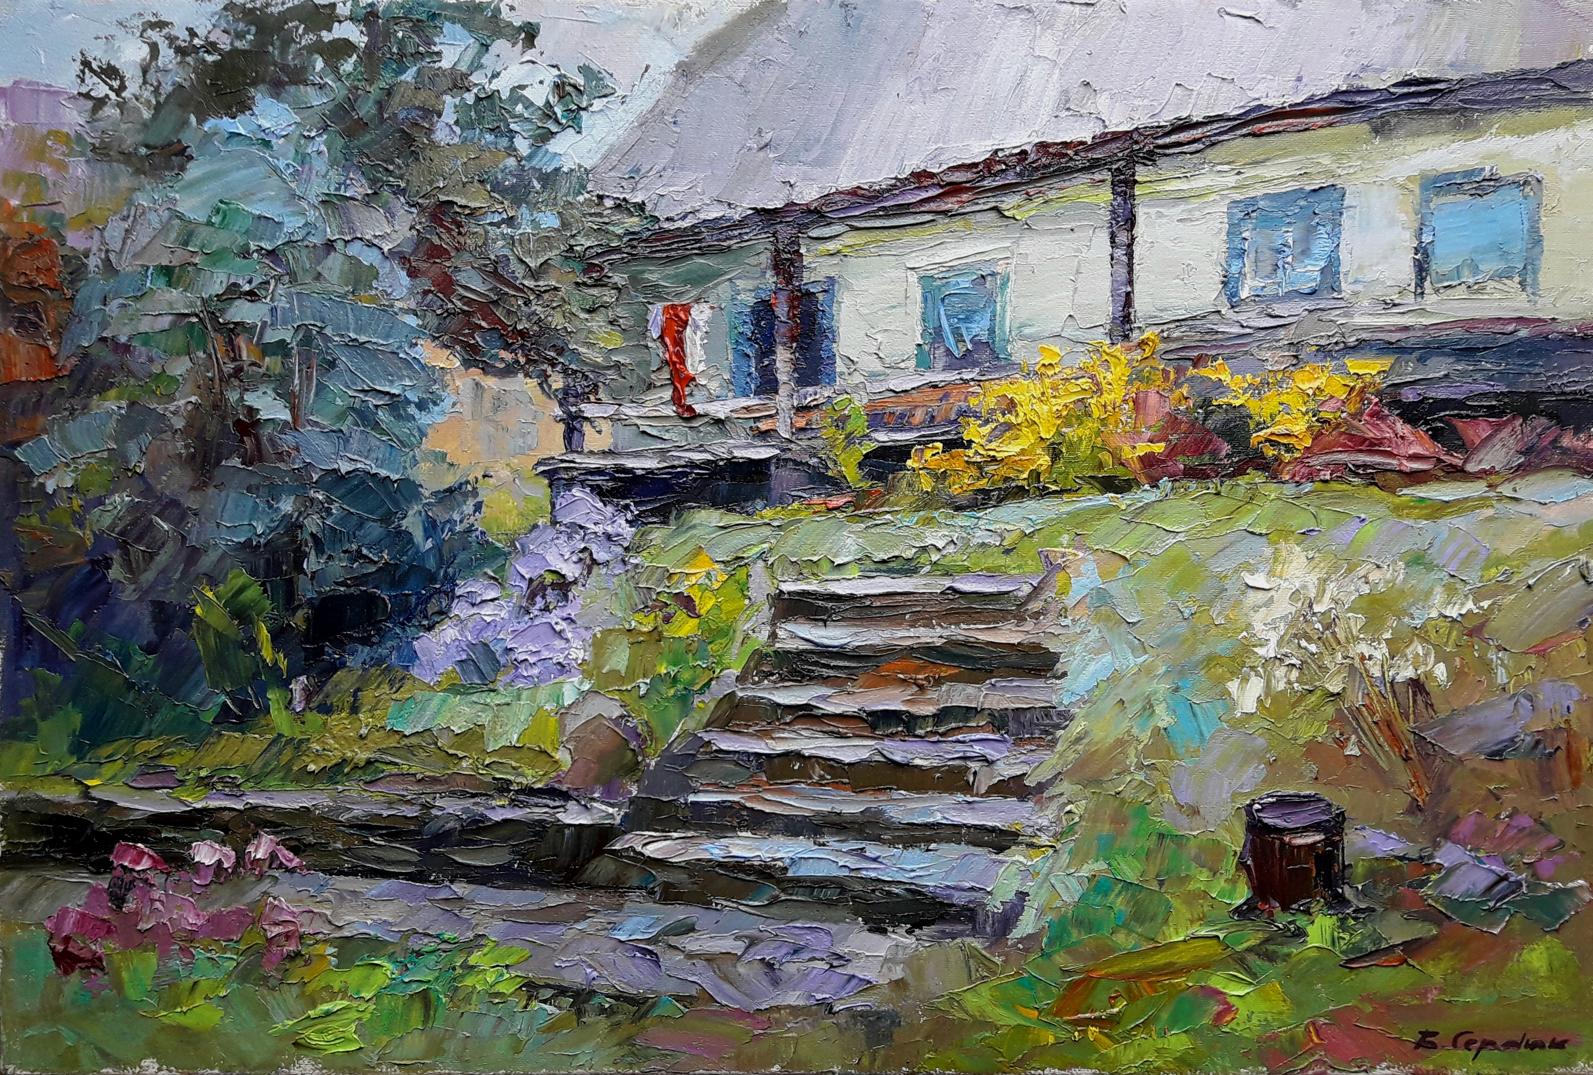 Oil painting In Transcarpathia Serdyuk Boris Petrovich